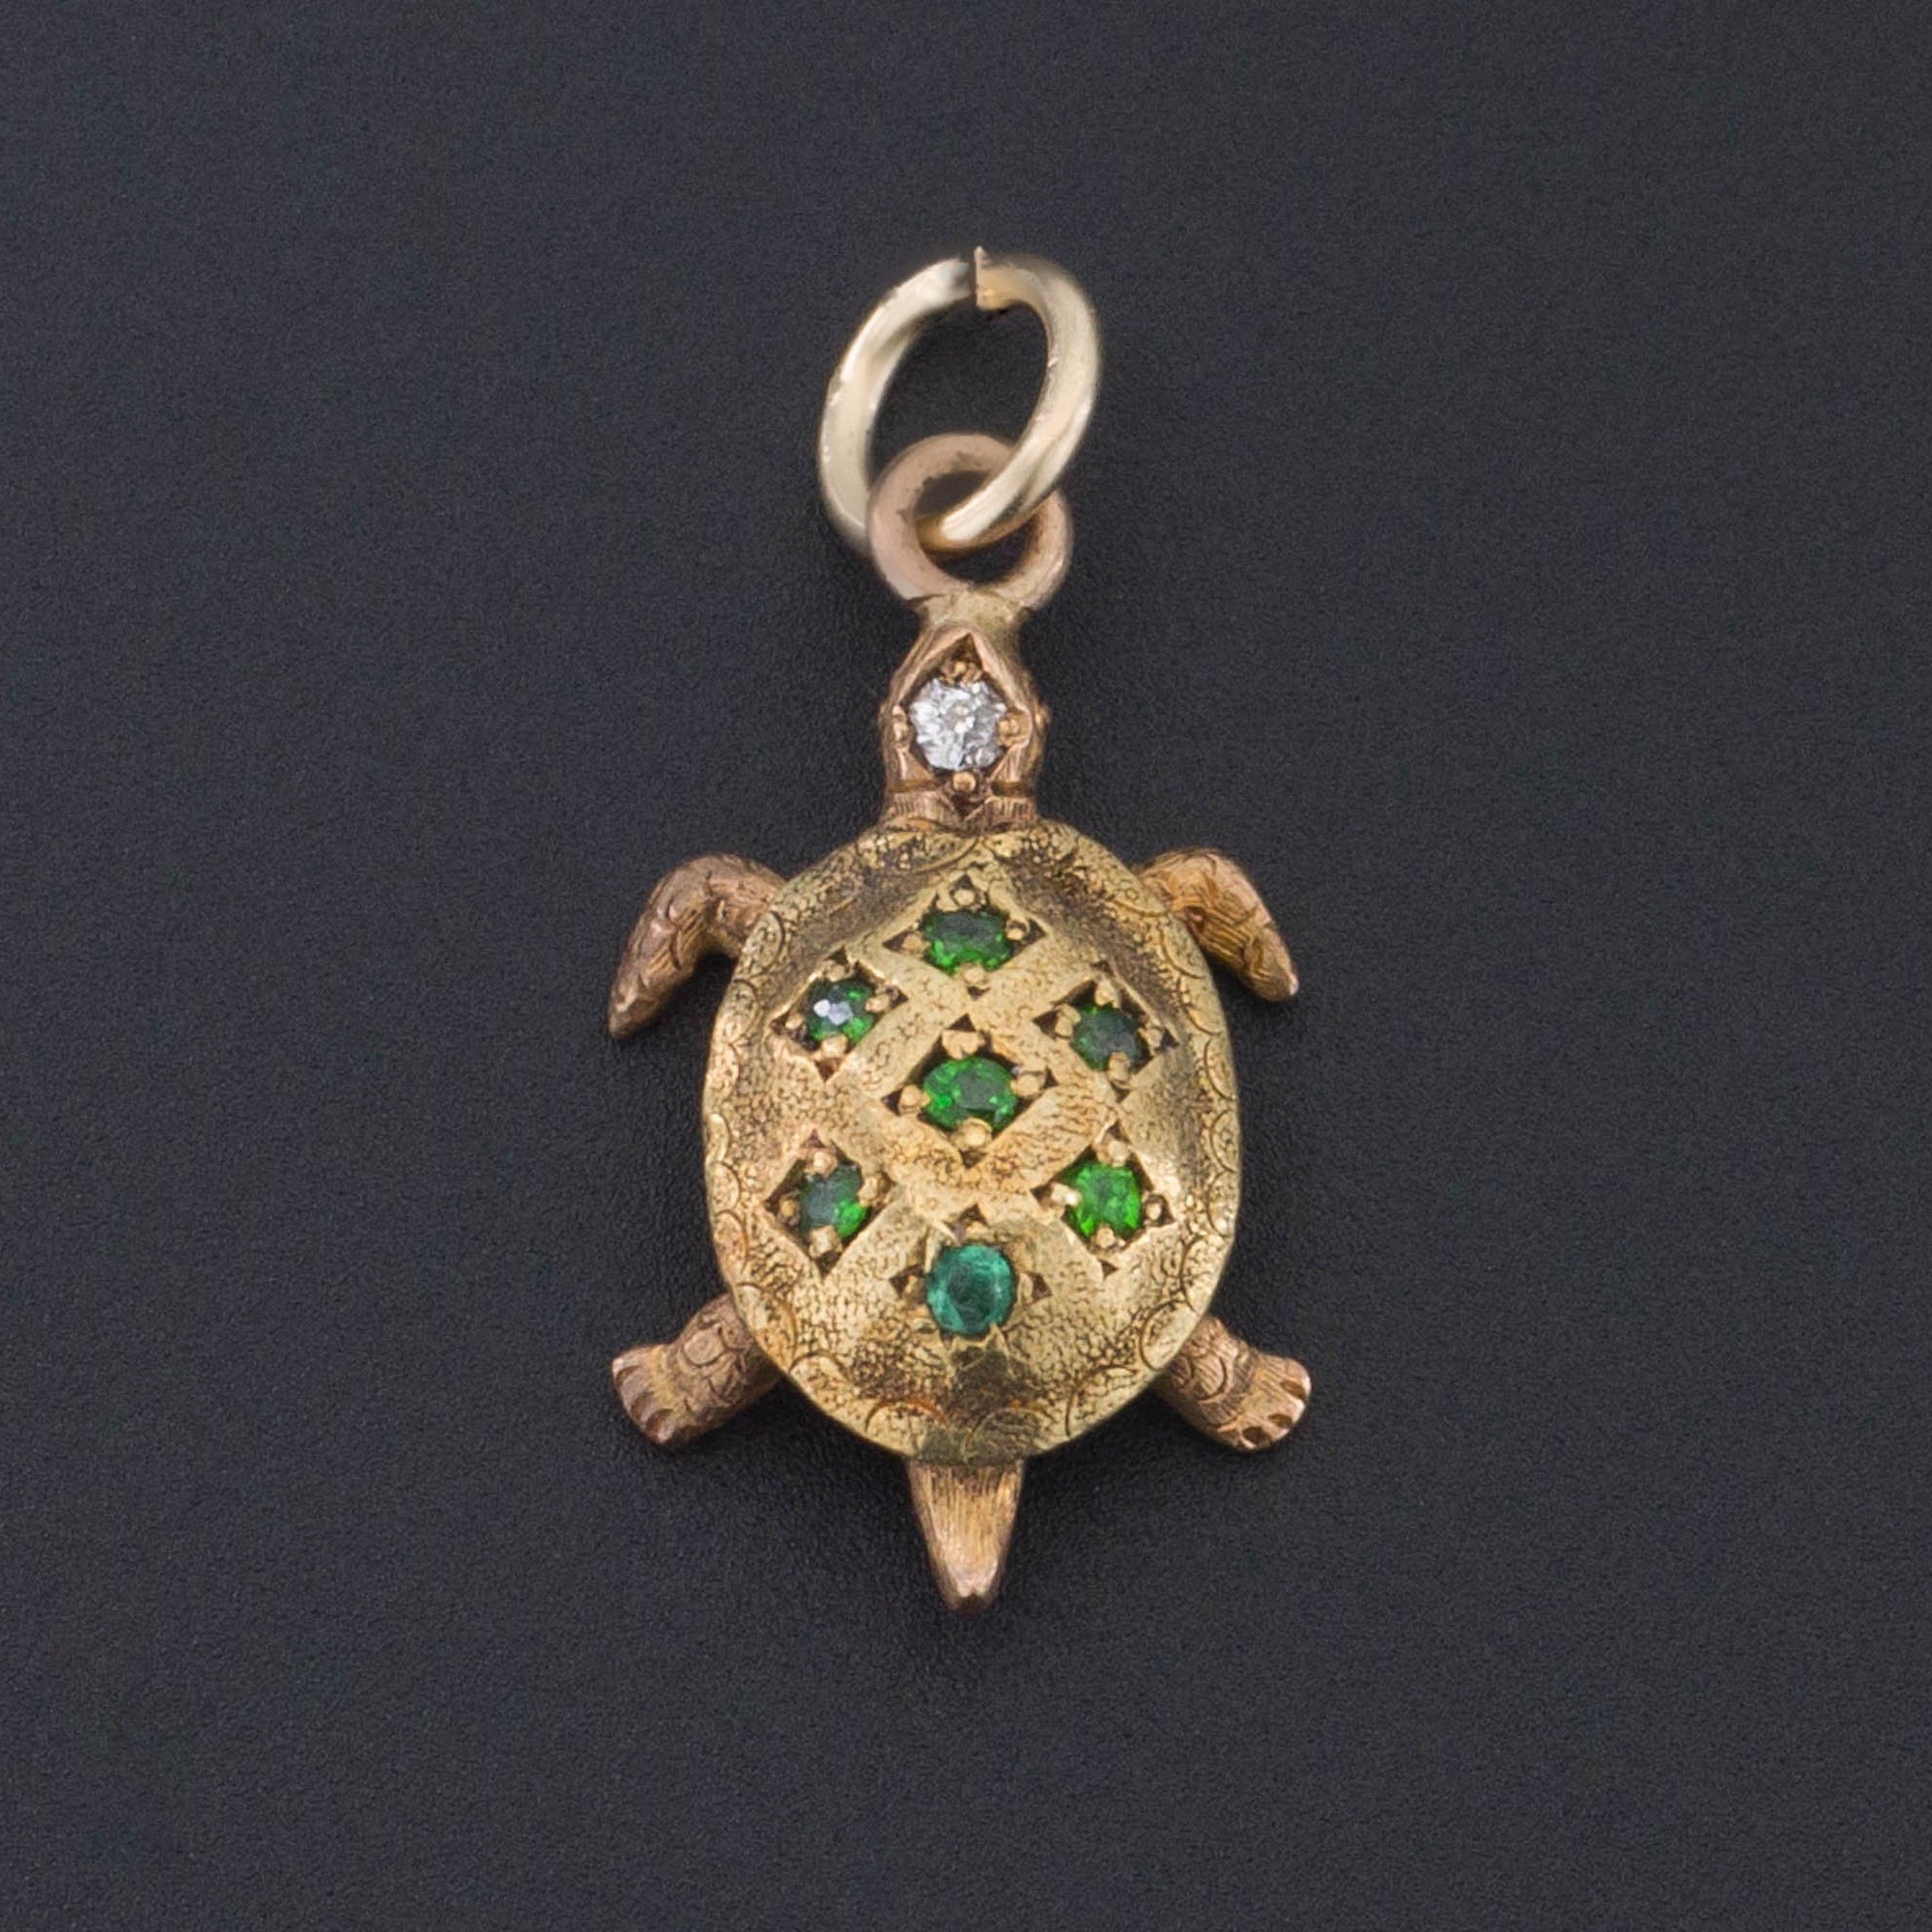 Antique Turtle Charm | 14k Gold Turtle Charm or Pendant | Pin Conversion | Diamond and Demantoid Garnet Turtle